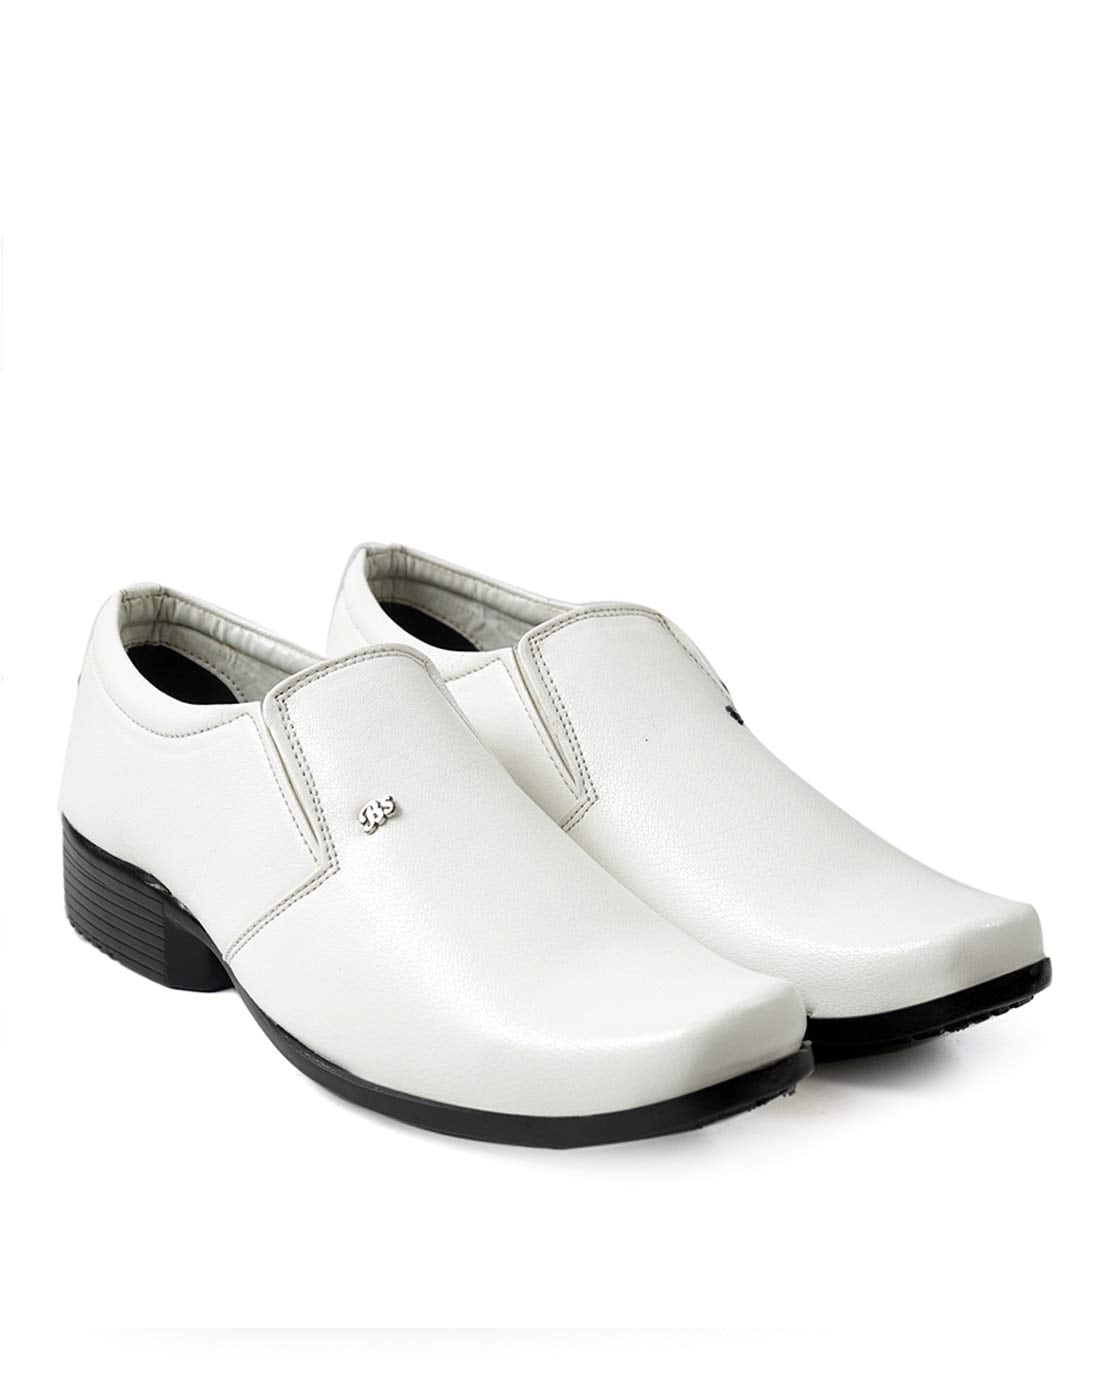 Buy Men White Formal Moccasin Online | SKU: 19-4703-16-40-Metro Shoes